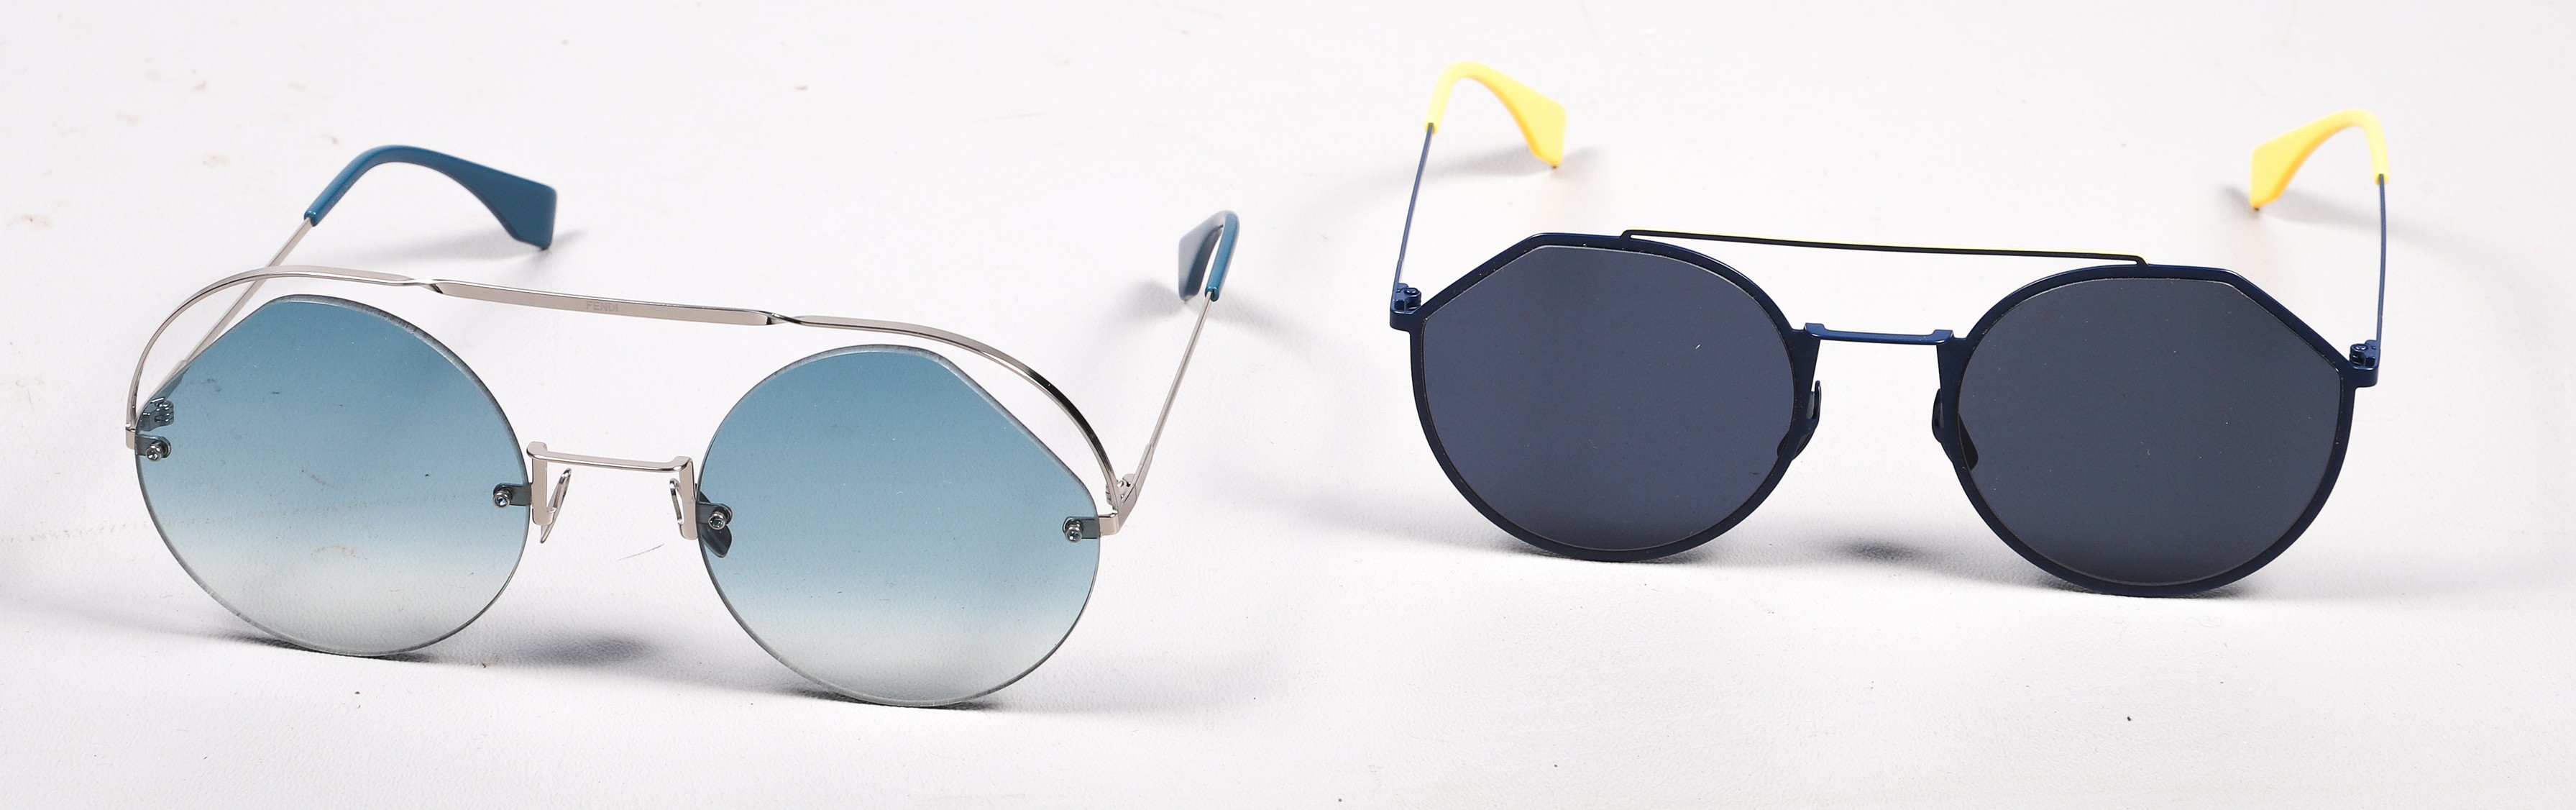  2 Pair Fendi sunglasses to include 3b48f9